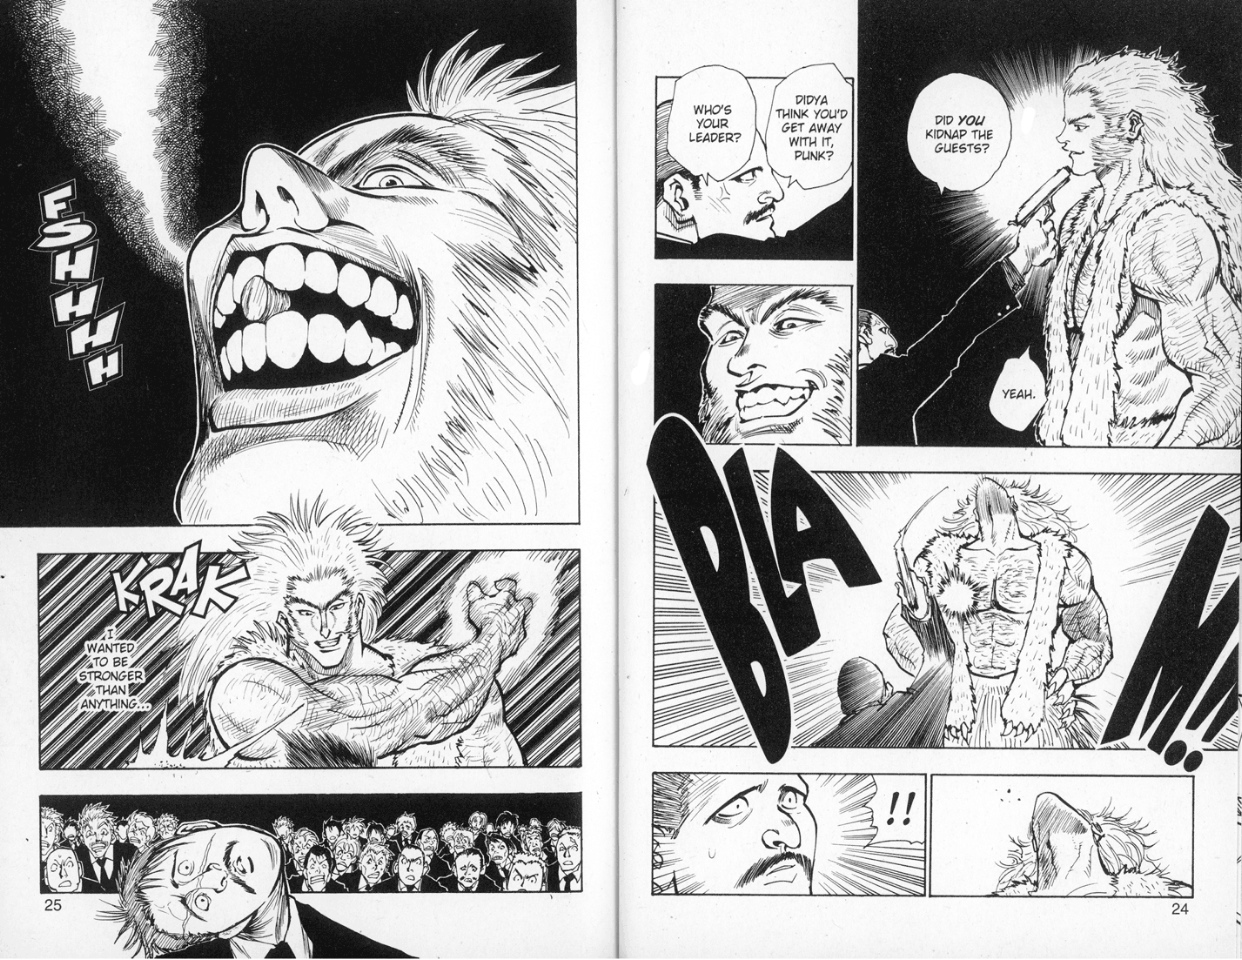 HUNTER X HUNTER 2 Manga Manga Comic Book JAPANESE LANGUAGE